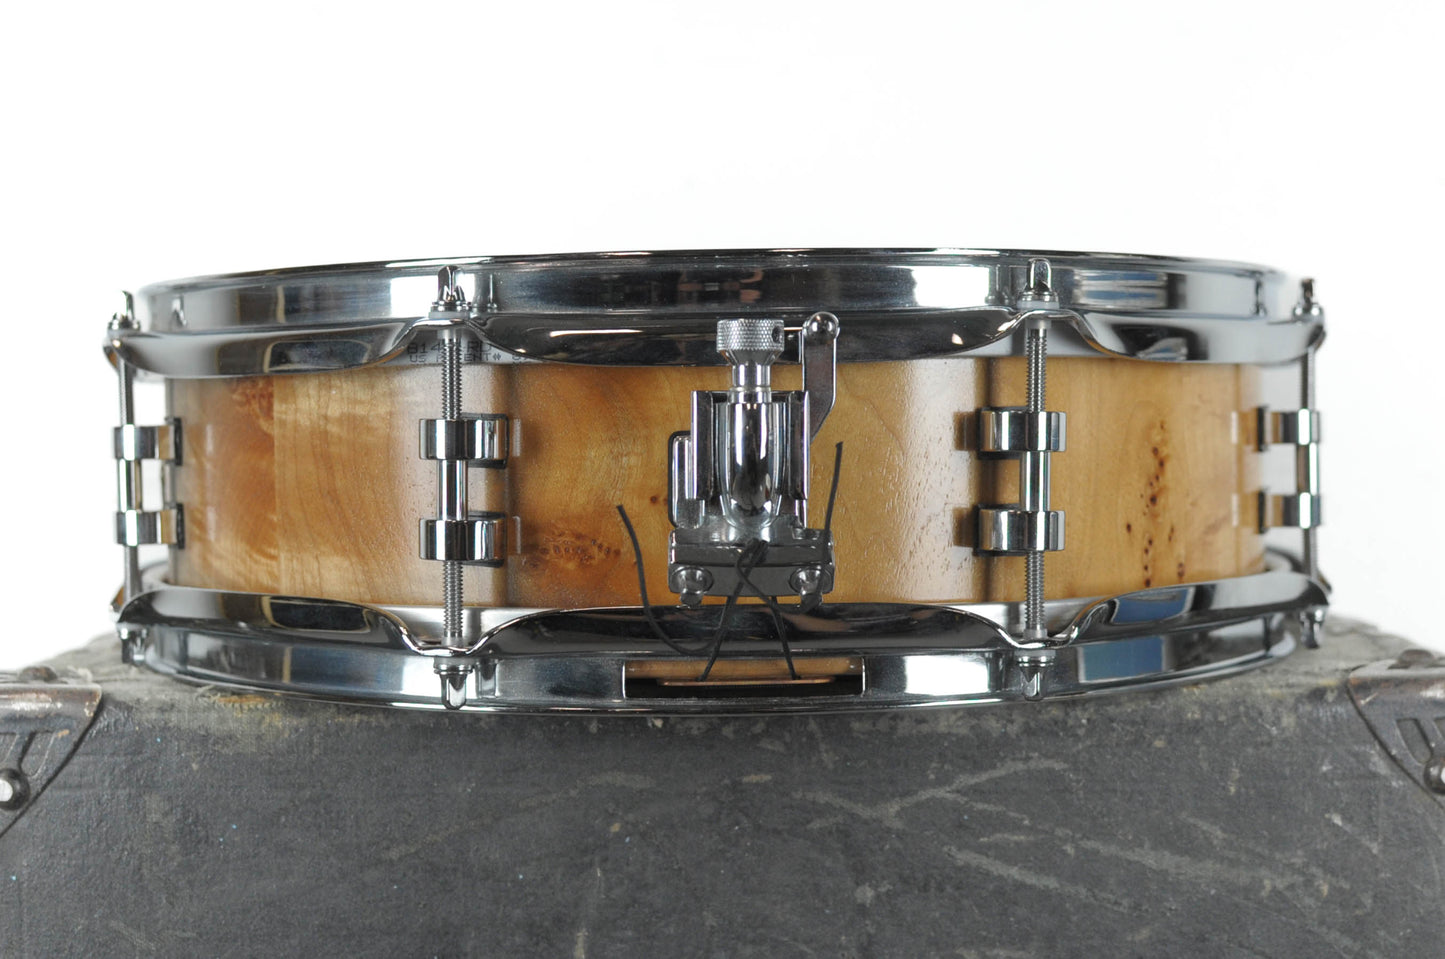 Doc Sweeney Drums 4.5x14 "Crack" Snare Drum